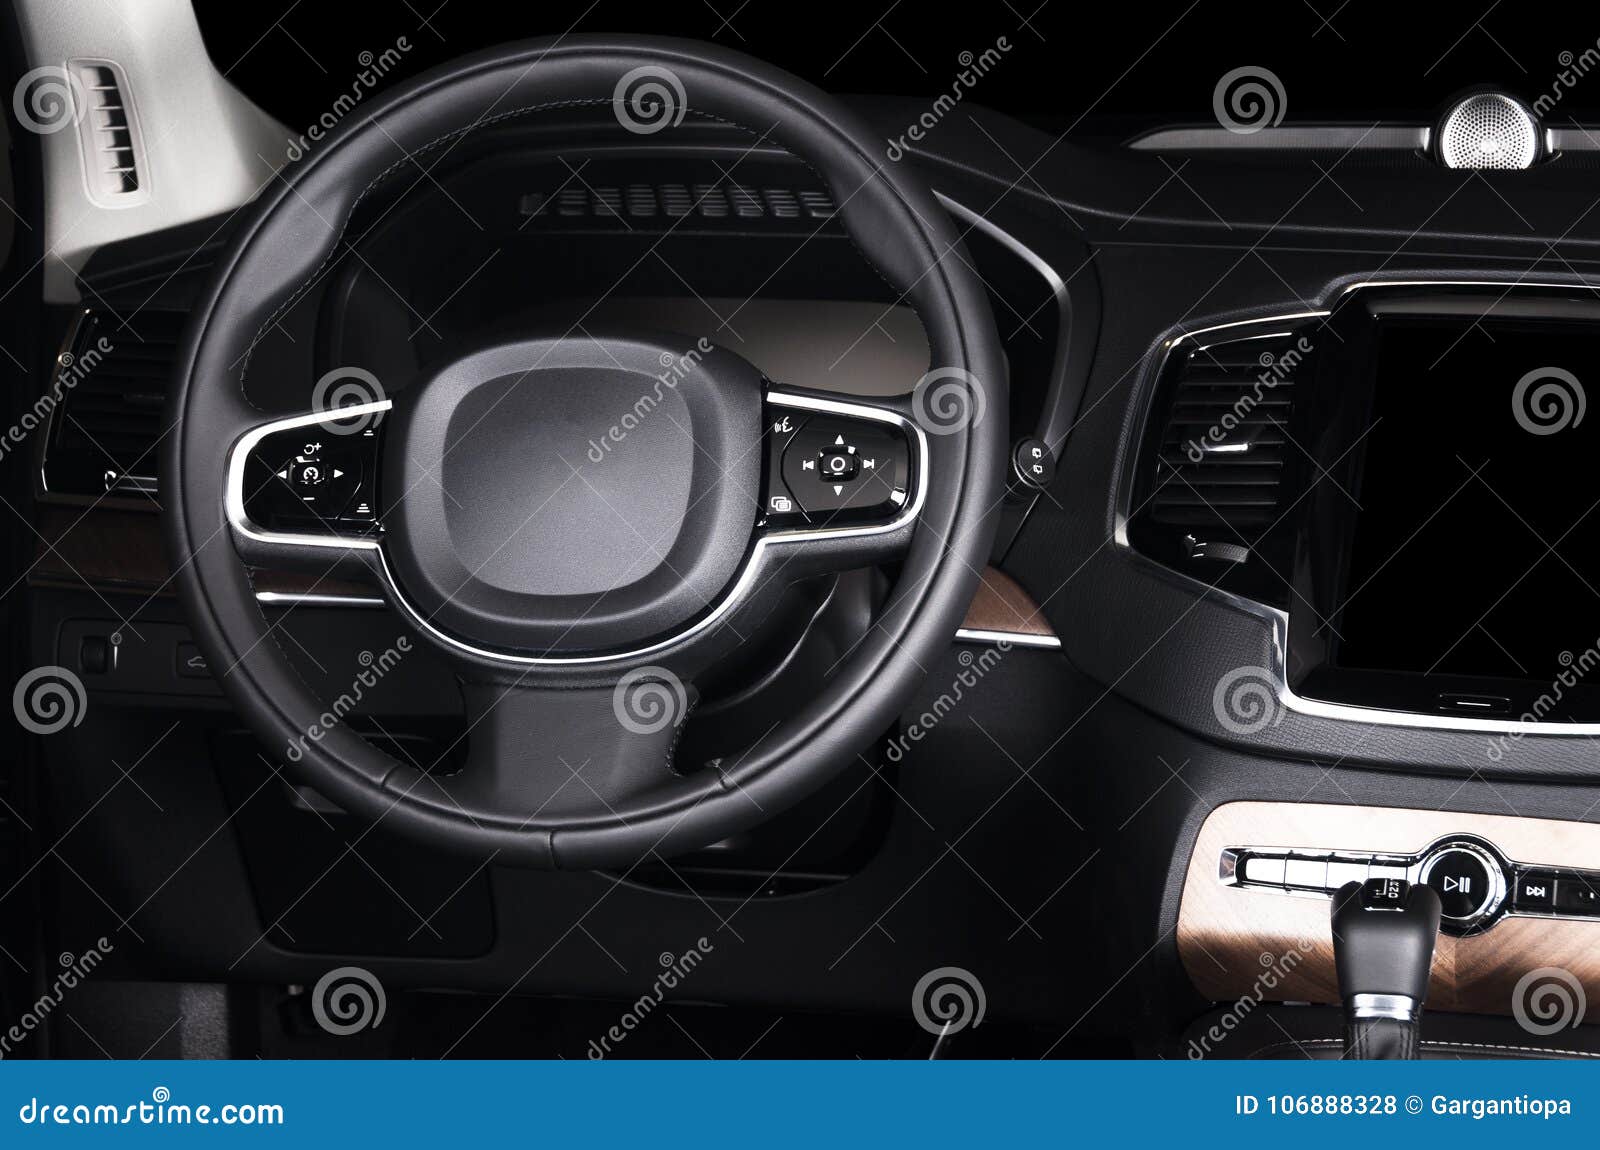 Luxury Car Inside Interior Of Prestige Modern Car Stock